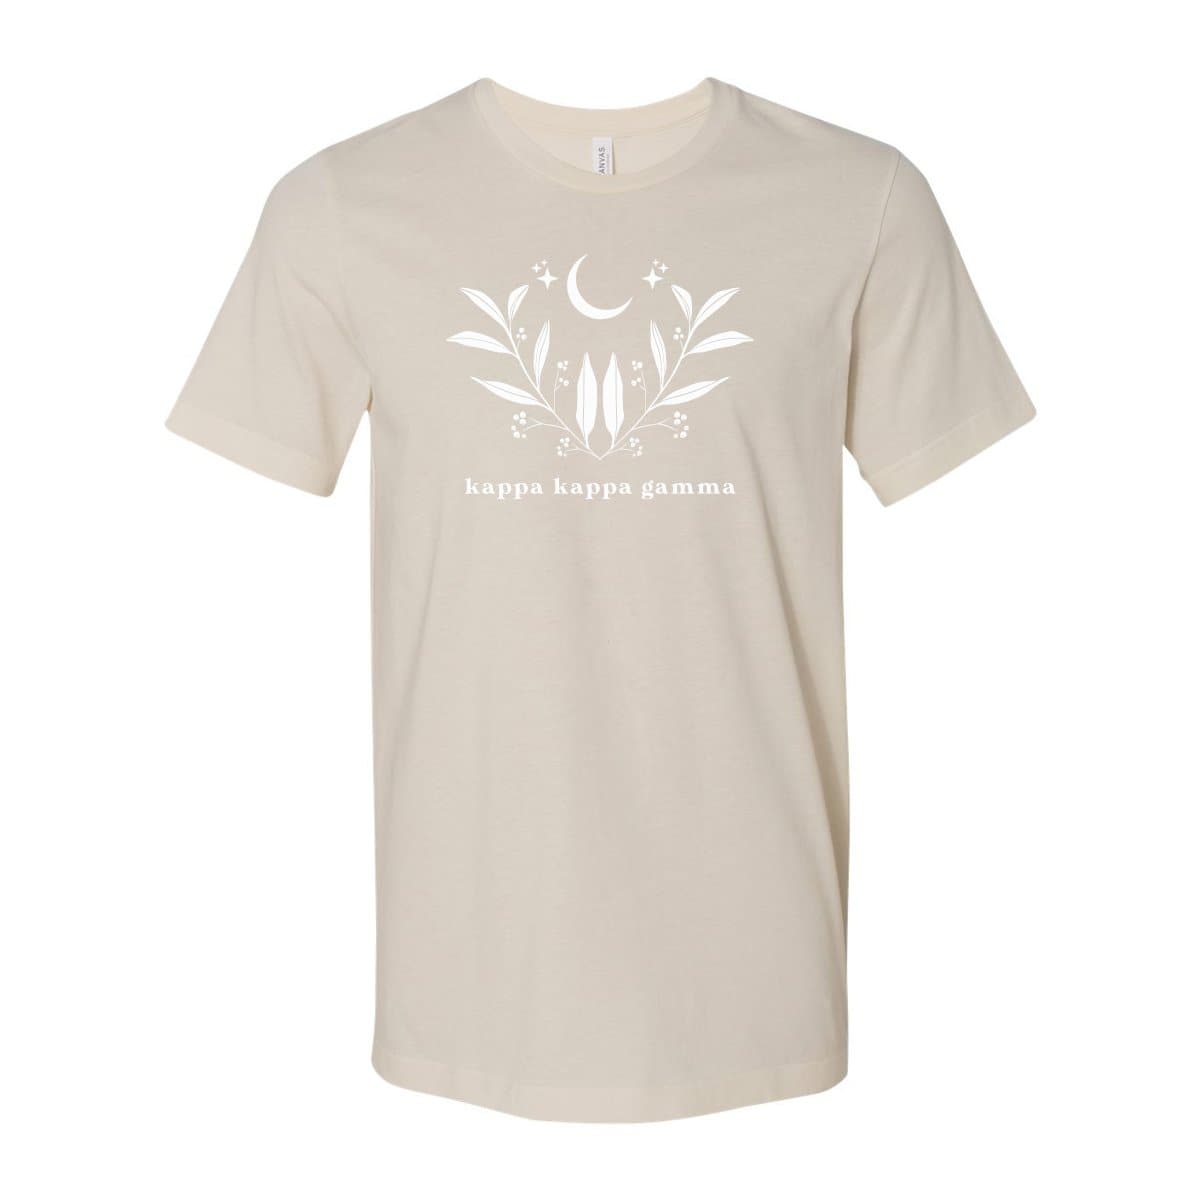 Kappa Moonlight Magic Tee | Kappa Kappa Gamma | Shirts > Short sleeve t-shirts